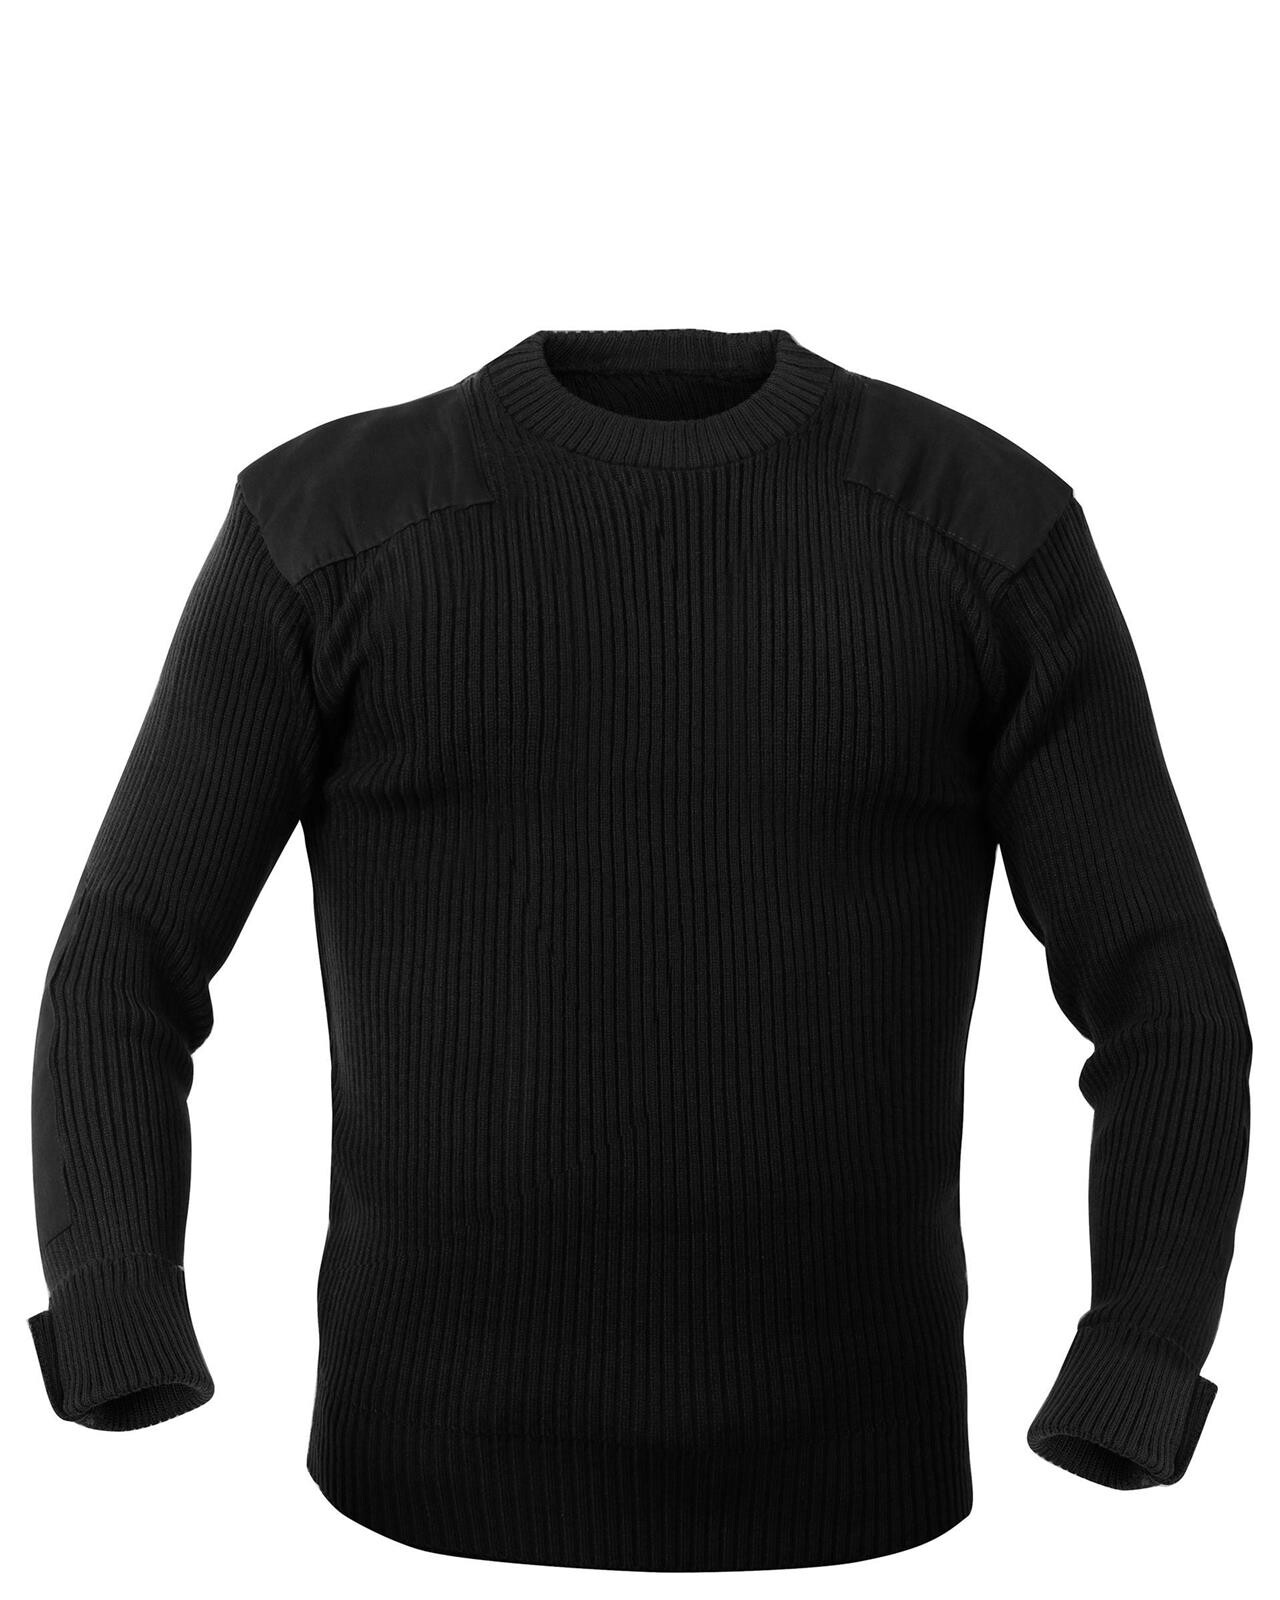 9: Rothco Commando Sweater - G.I. Style (Sort, 3XL)